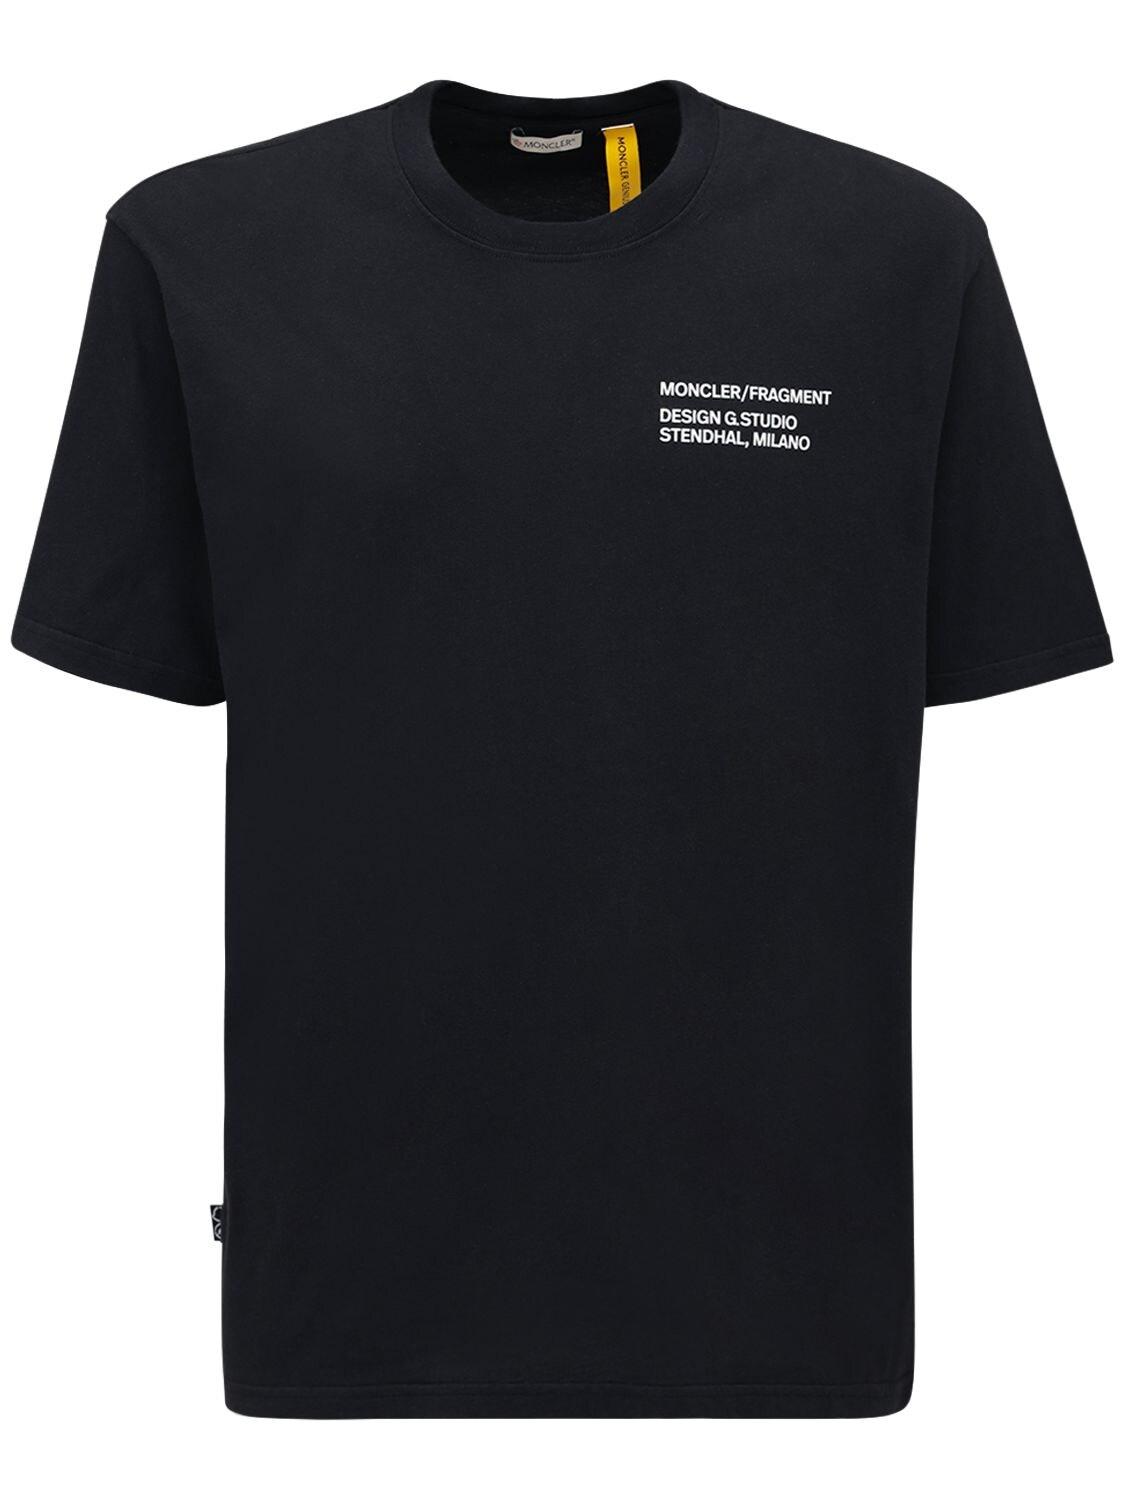 Moncler Genius Fragment Logo Cotton Jersey T-shirt in Black for Men - Lyst